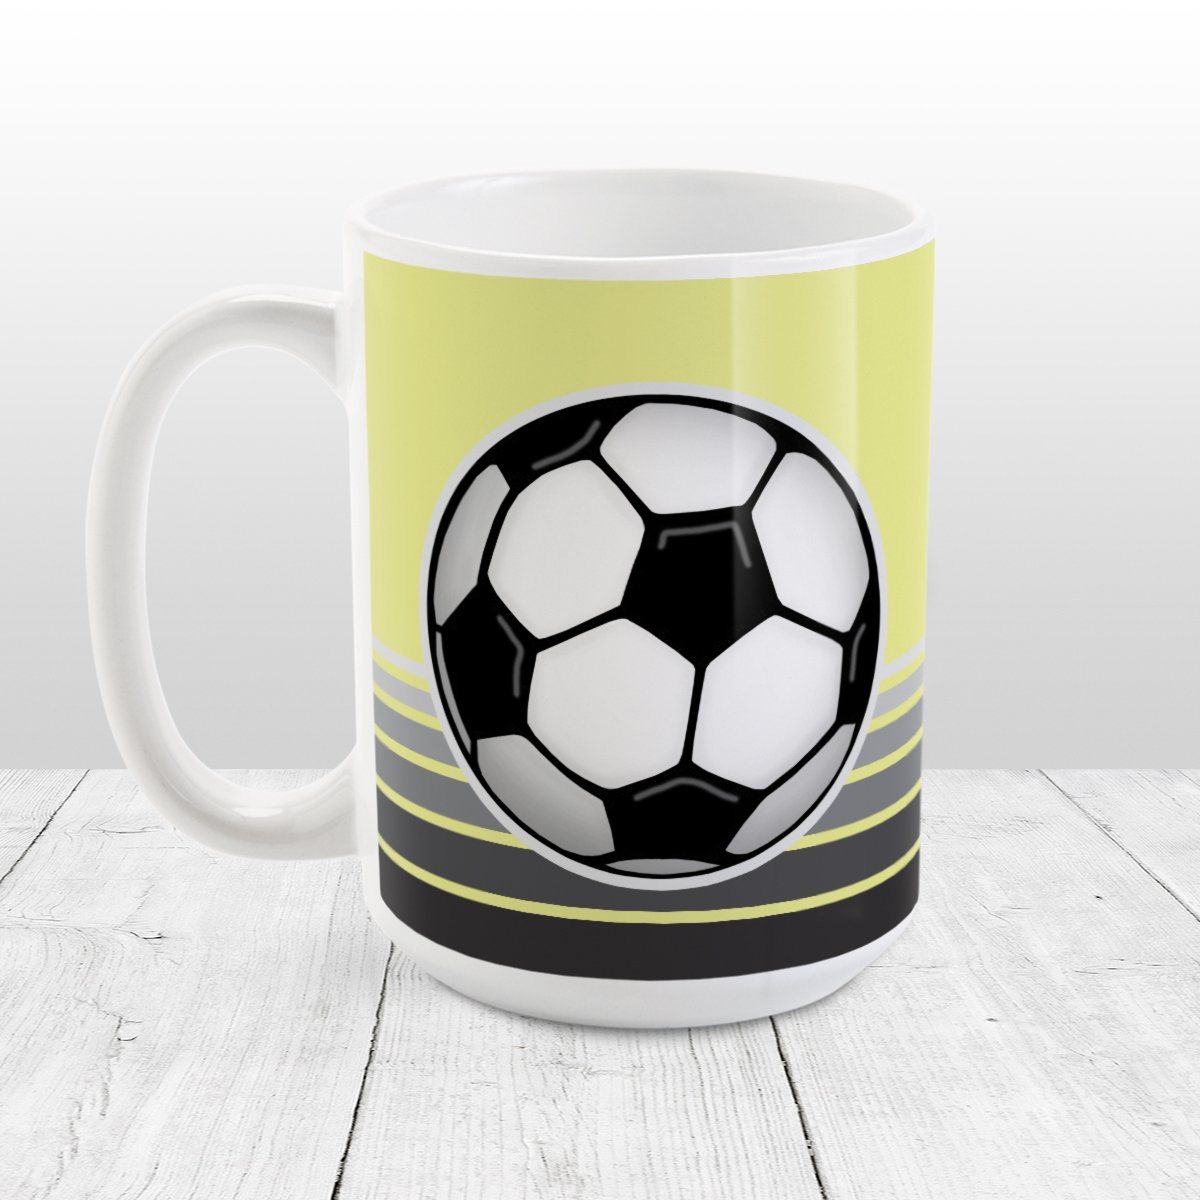 Gray Gradient Lined Yellow Soccer Ball Mug at Amy's Coffee Mugs